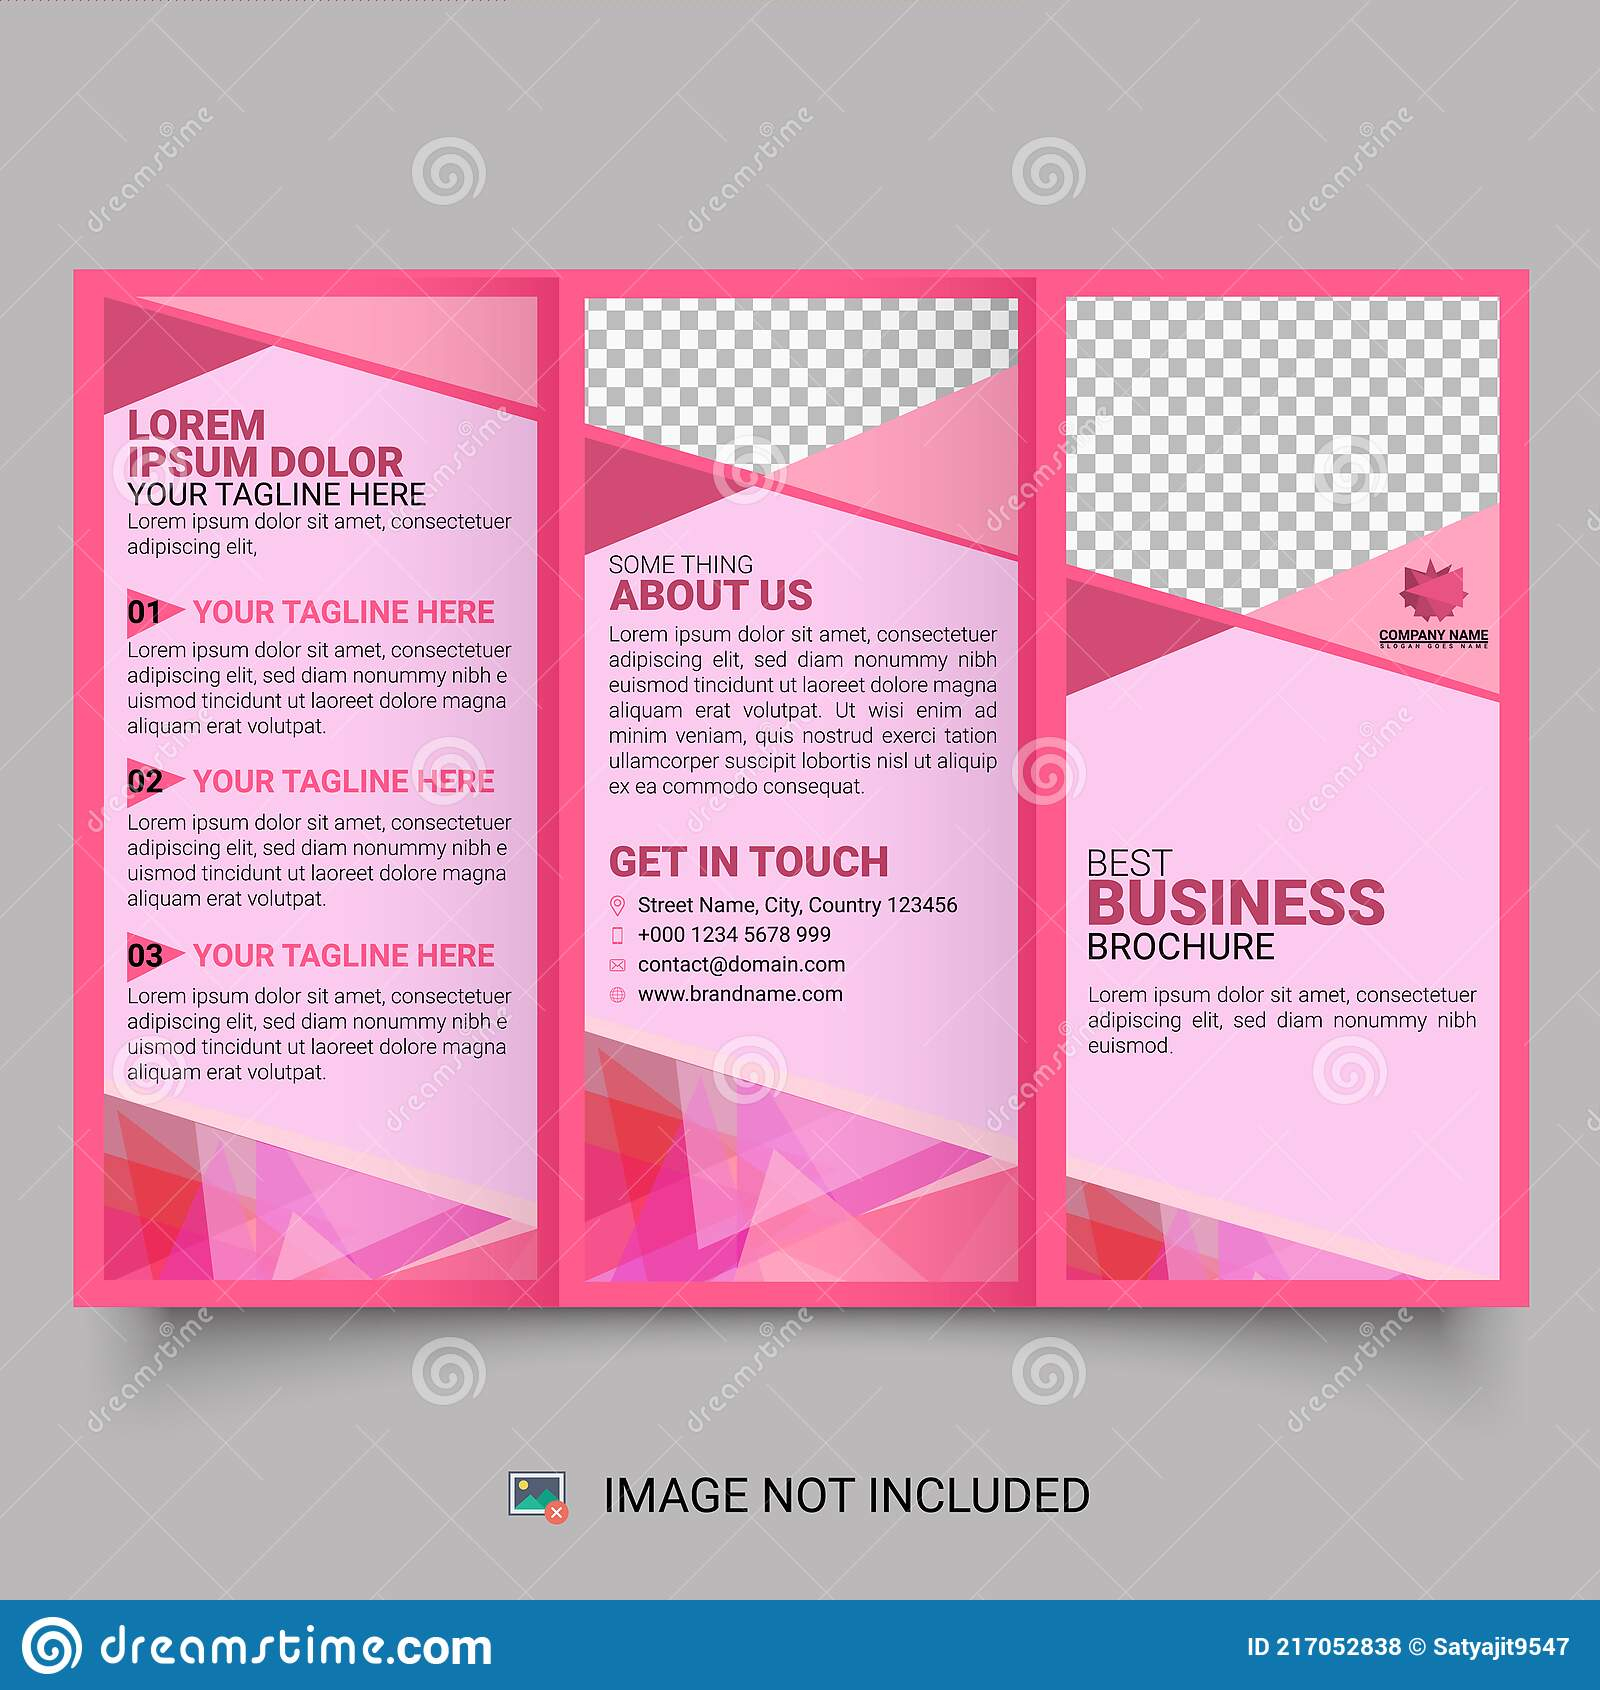 Best Business Brochure Templates. Free Brochure Templates. Stock